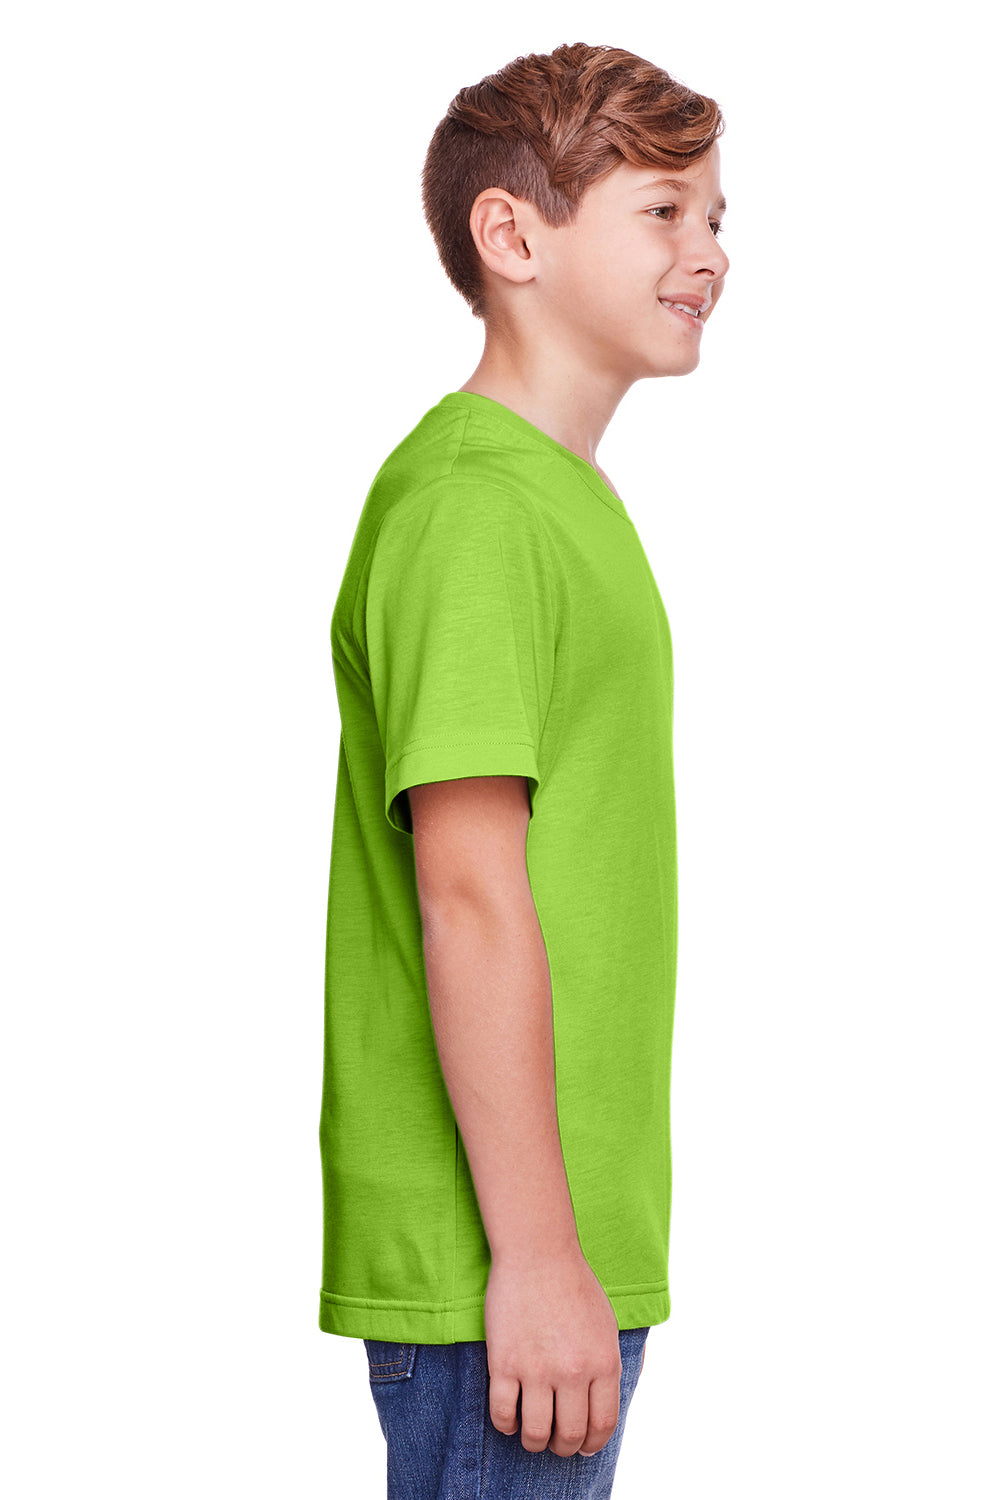 Core 365 CE111Y Youth Fusion ChromaSoft Performance Moisture Wicking Short Sleeve Crewneck T-Shirt Acid Green Side